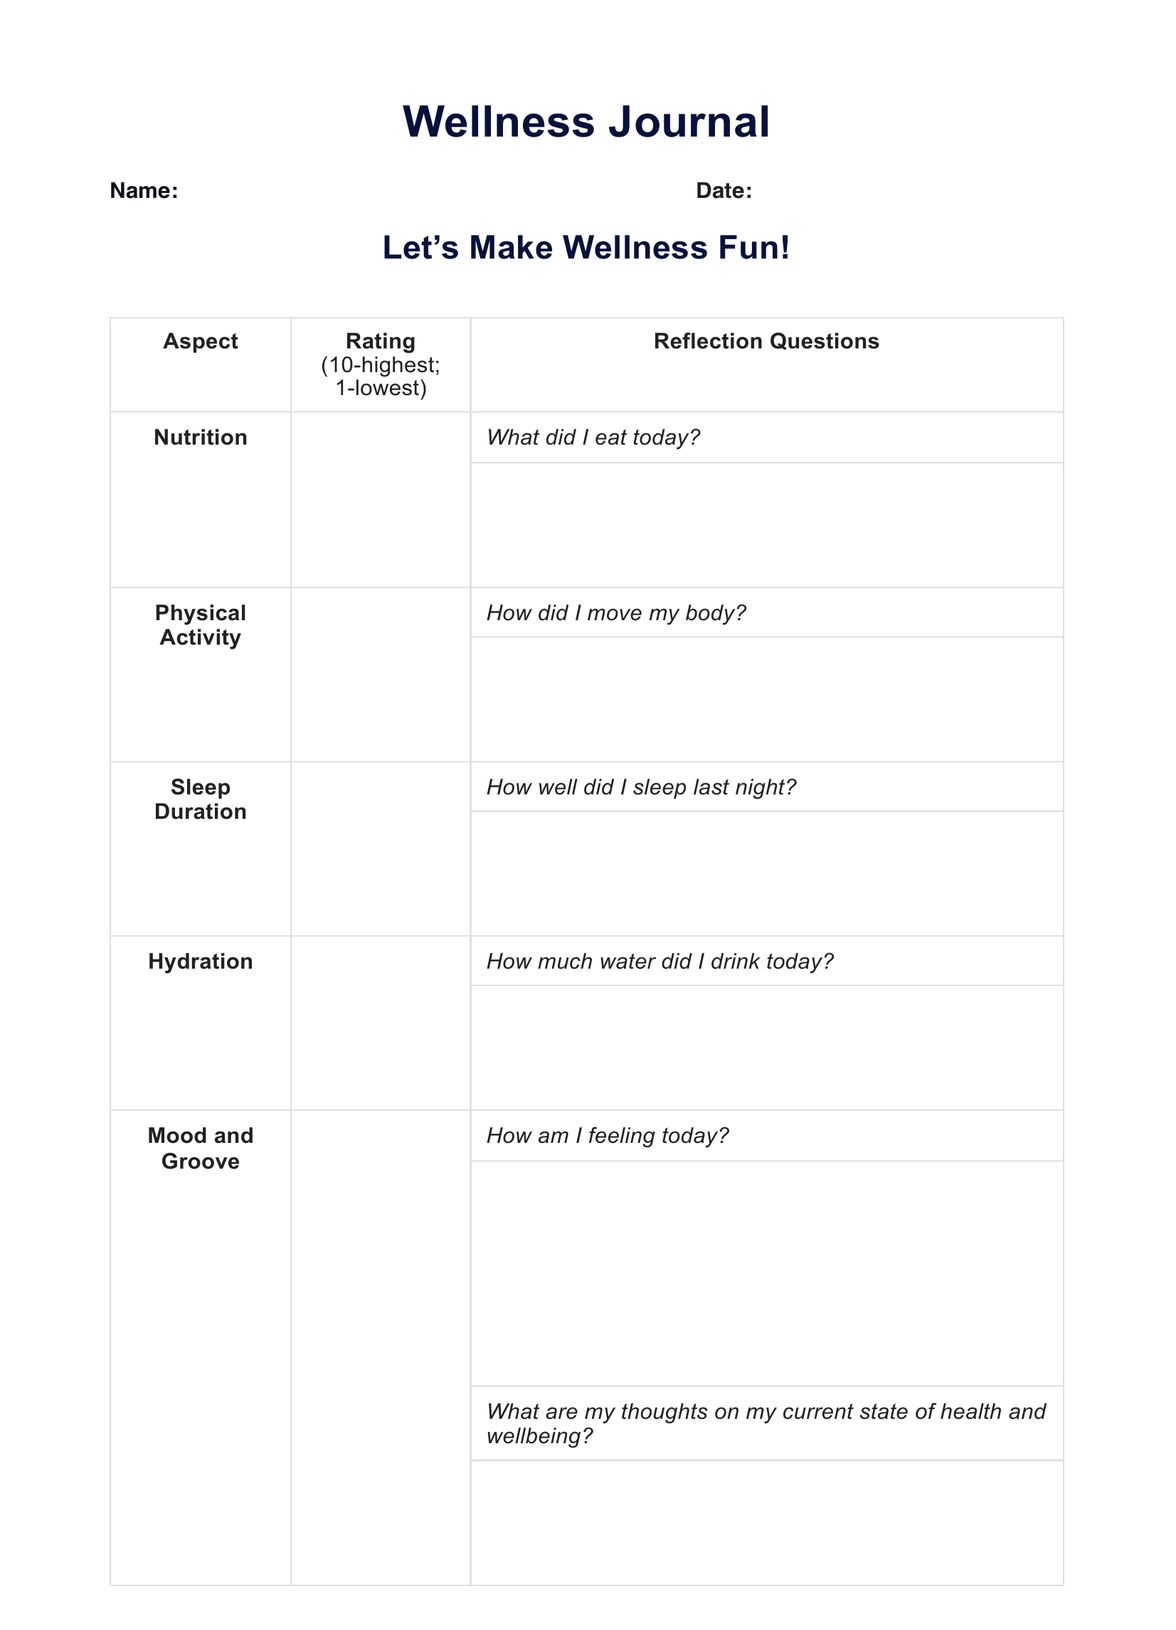 Wellness Journal PDF Example